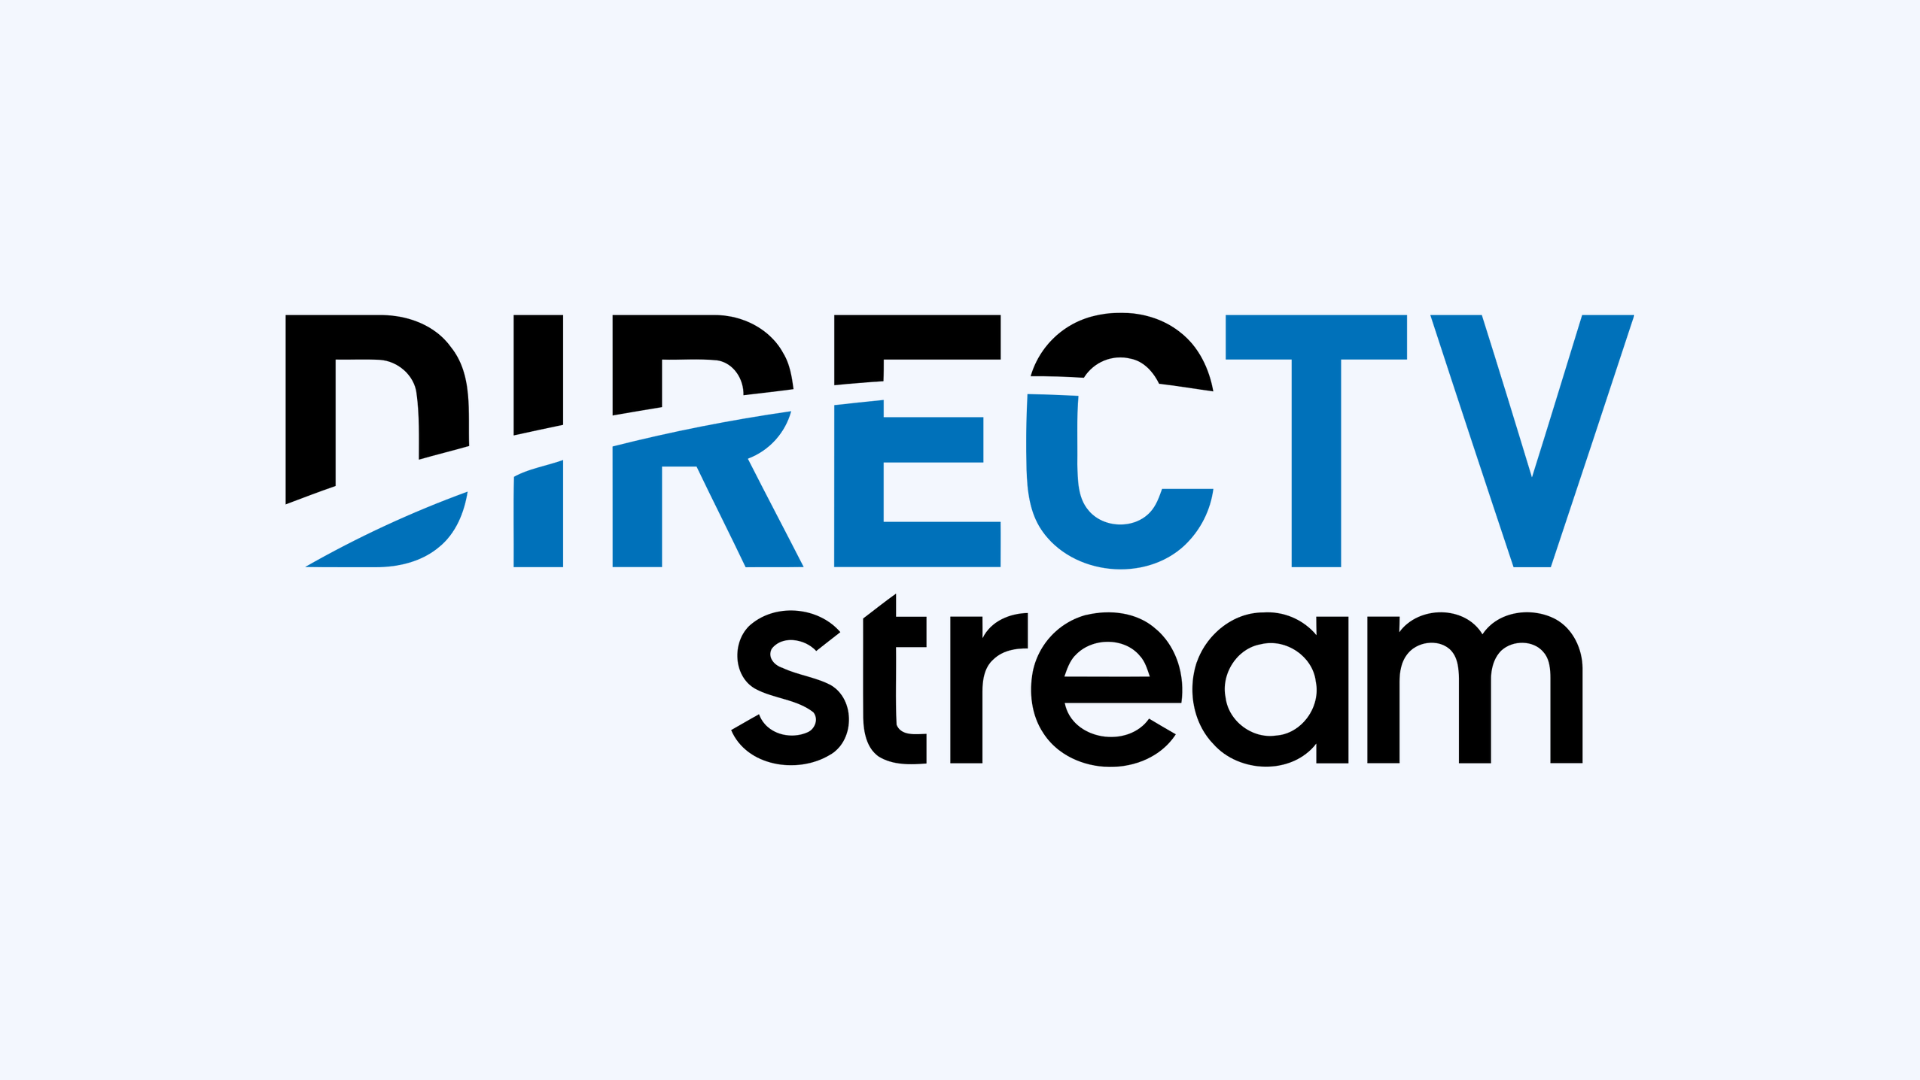 DIRECTV STREAM logo